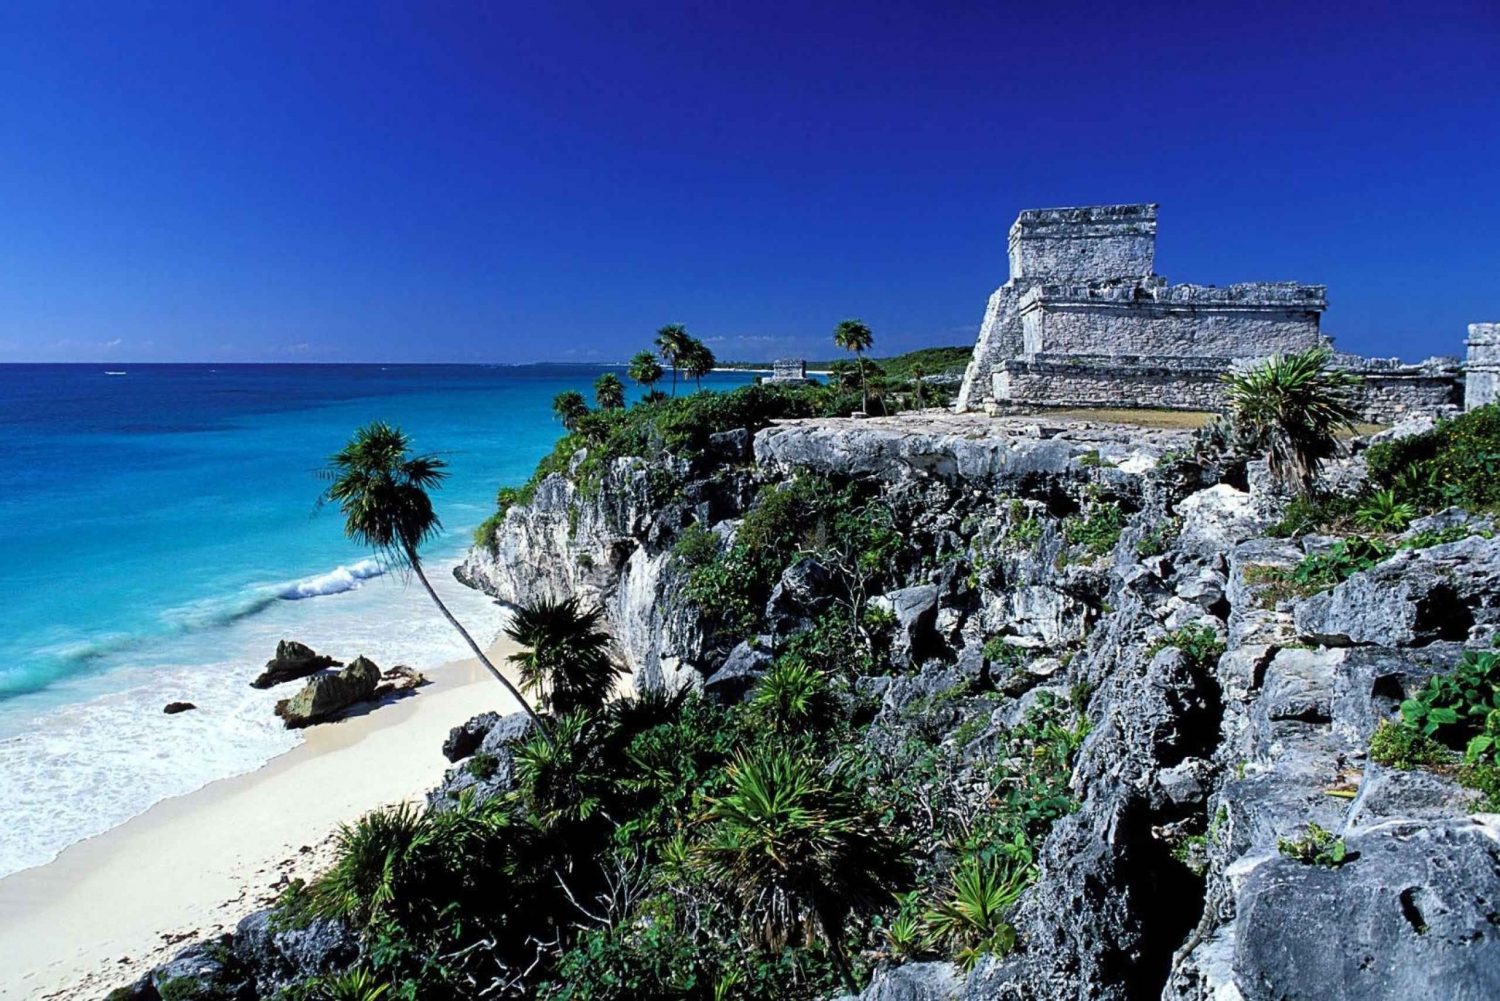 Full day tour: Tulum, Coba, Cenote and Playa del Carmen